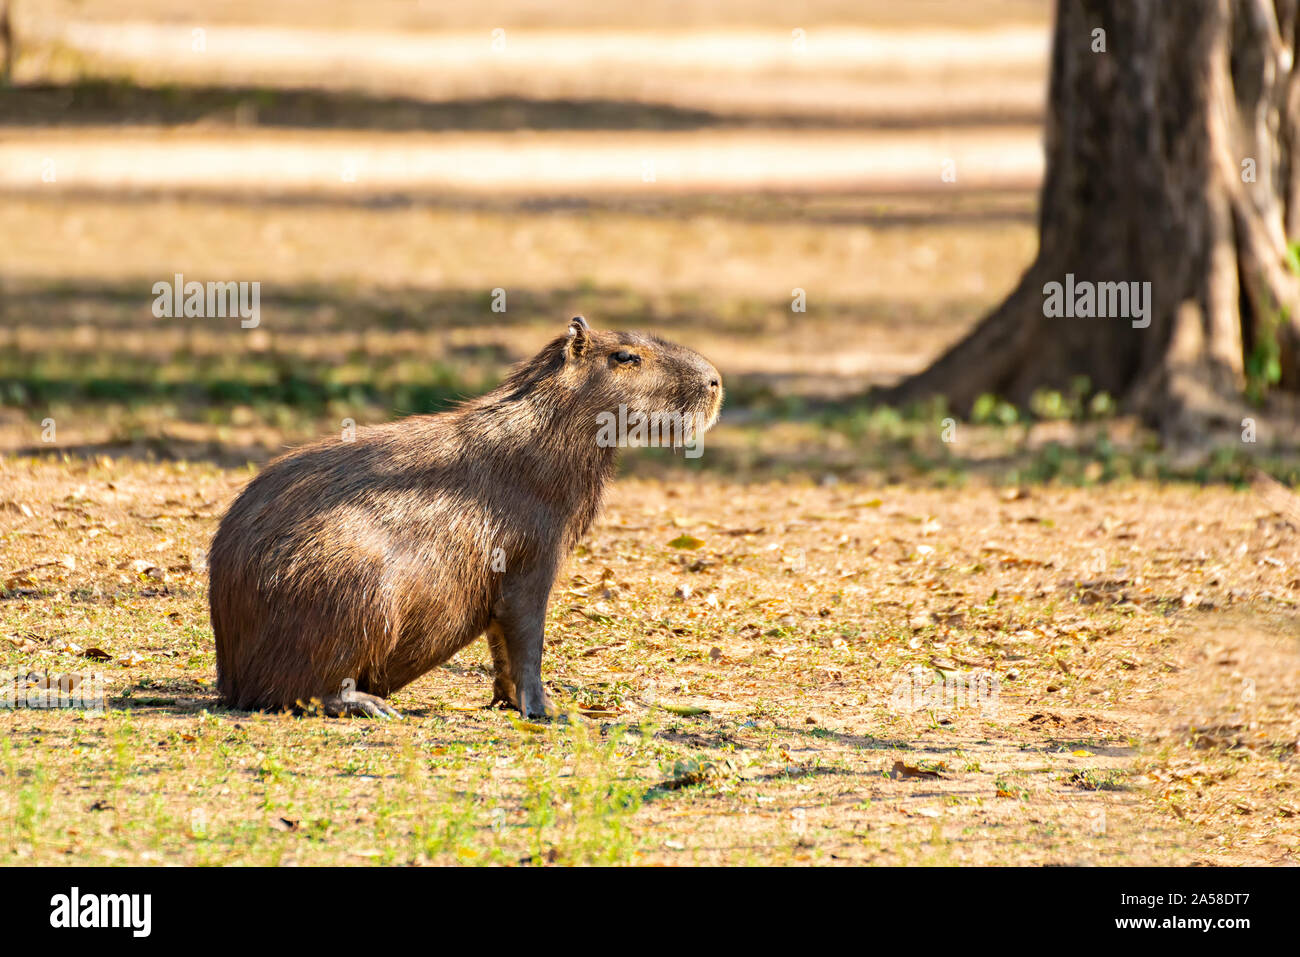 Capybara In The Sunlight Stock Photo